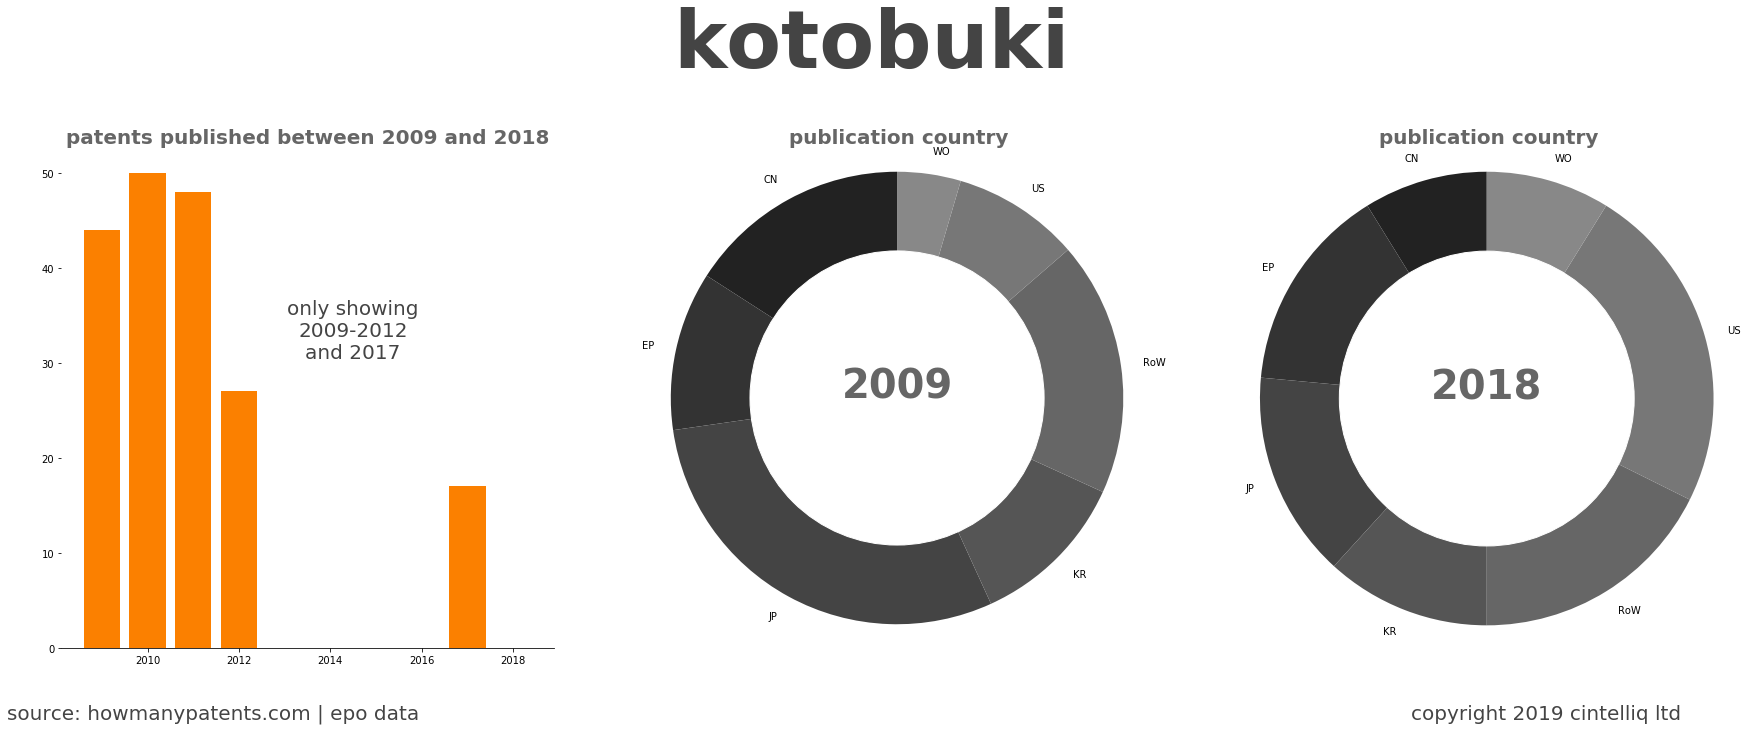 summary of patents for Kotobuki